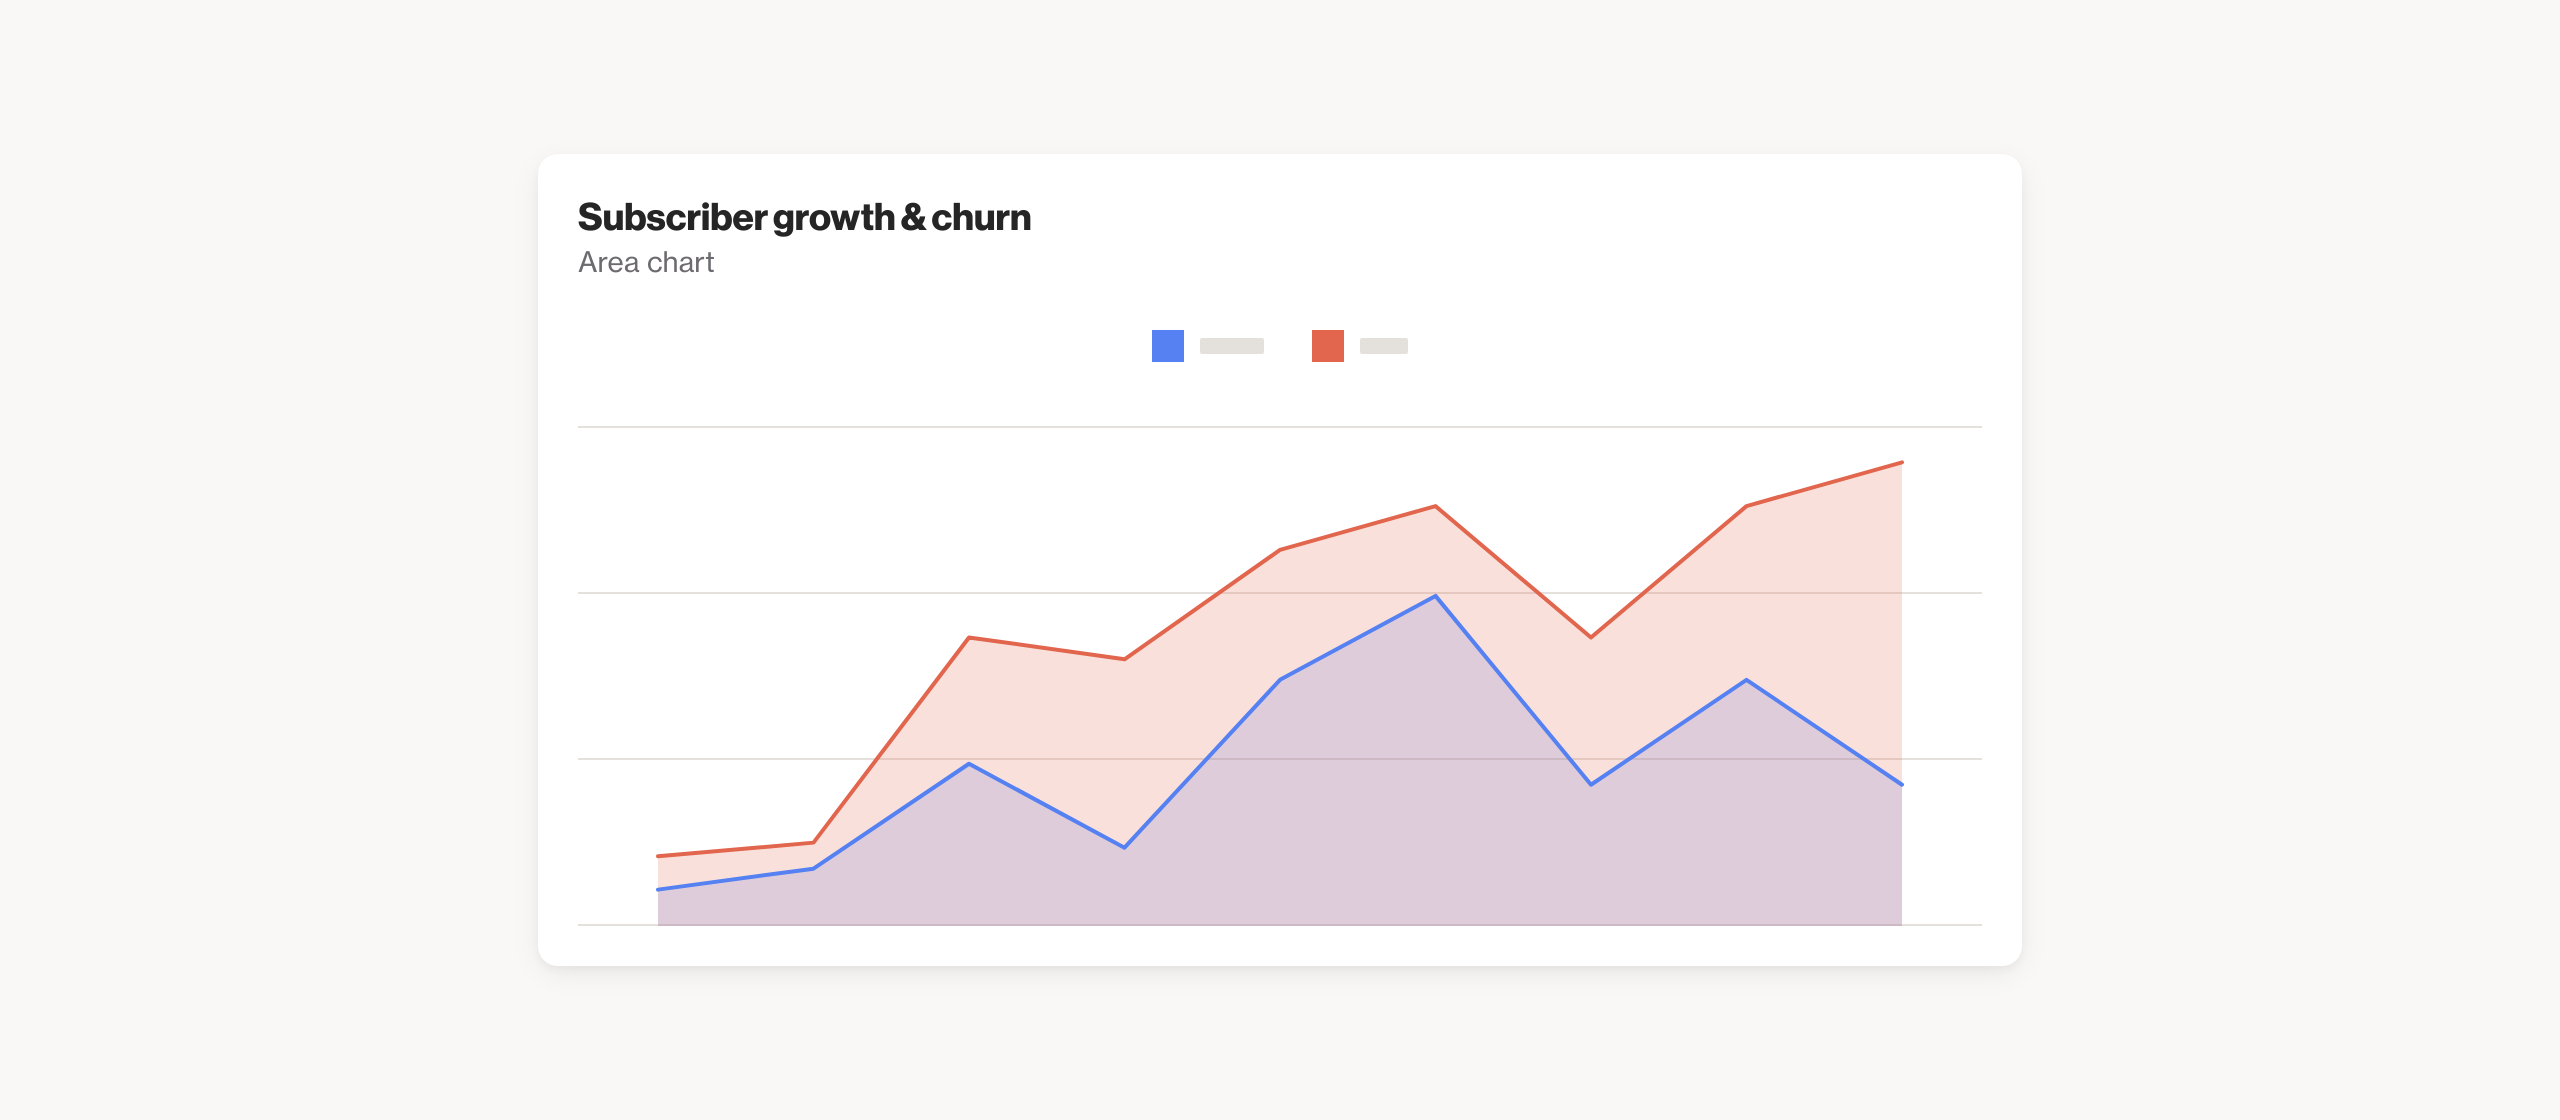 Subscriber growth & churn